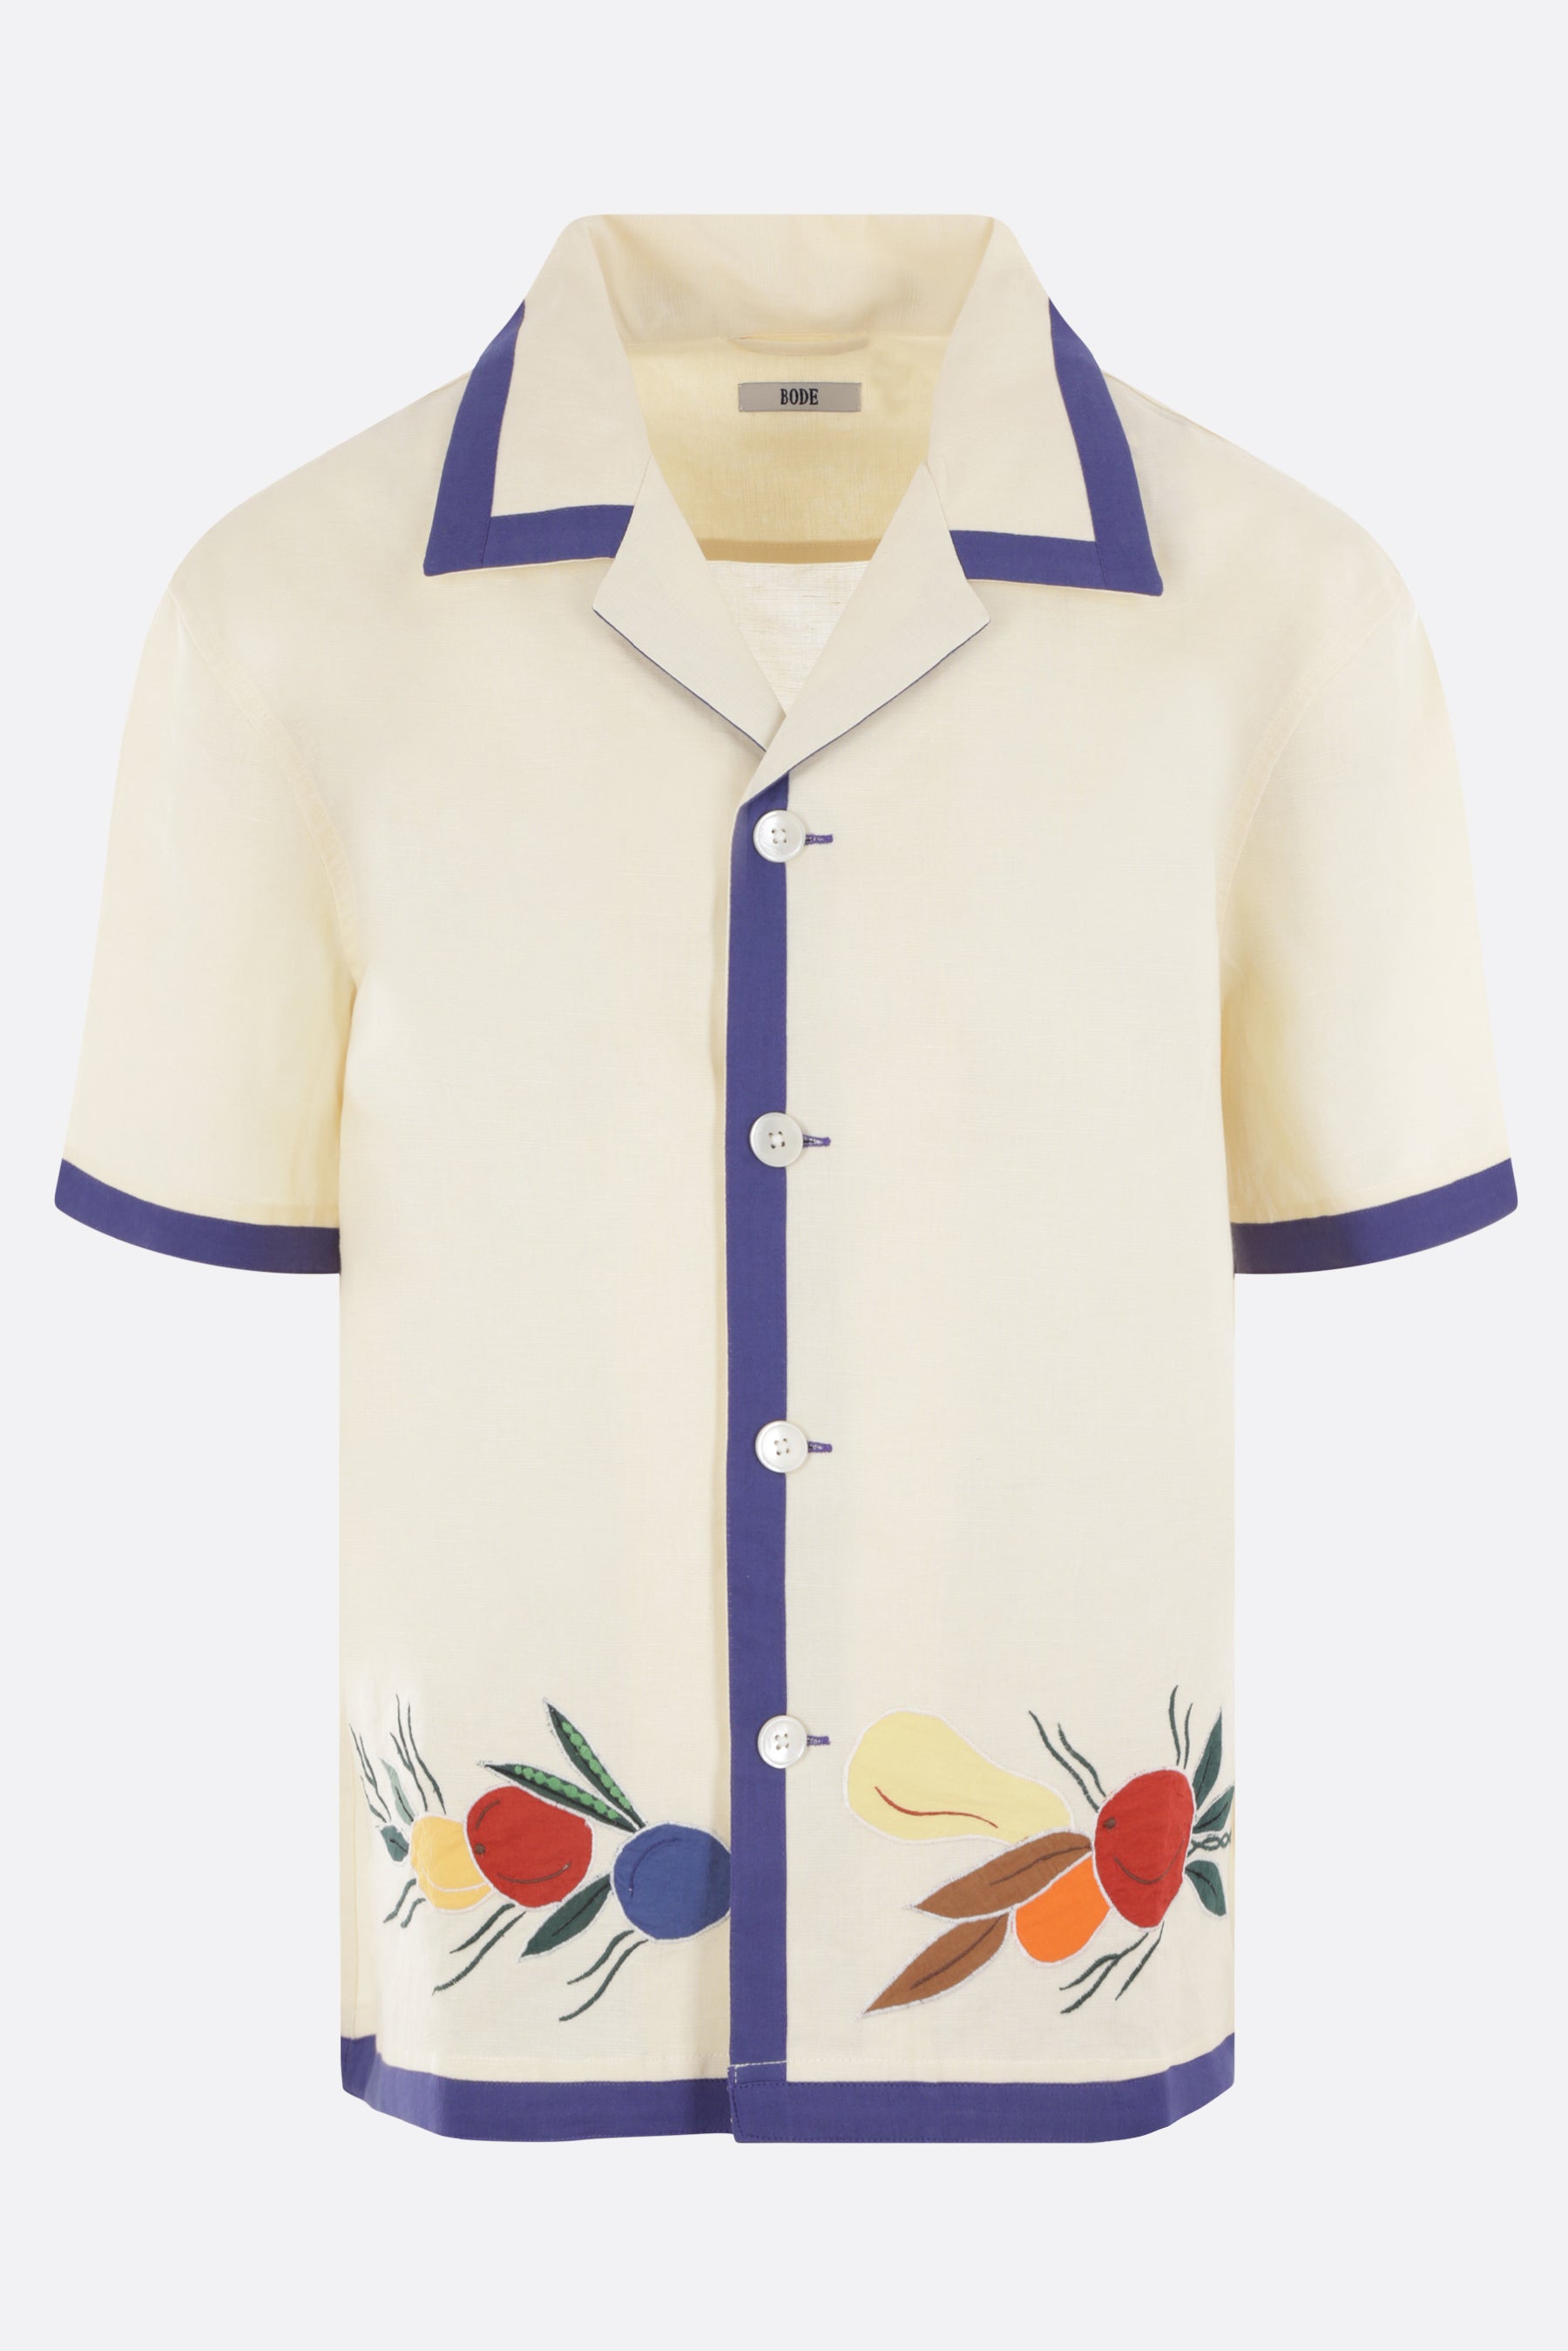 Appliqué Fruit Bunch linen and cotton bowling shirt